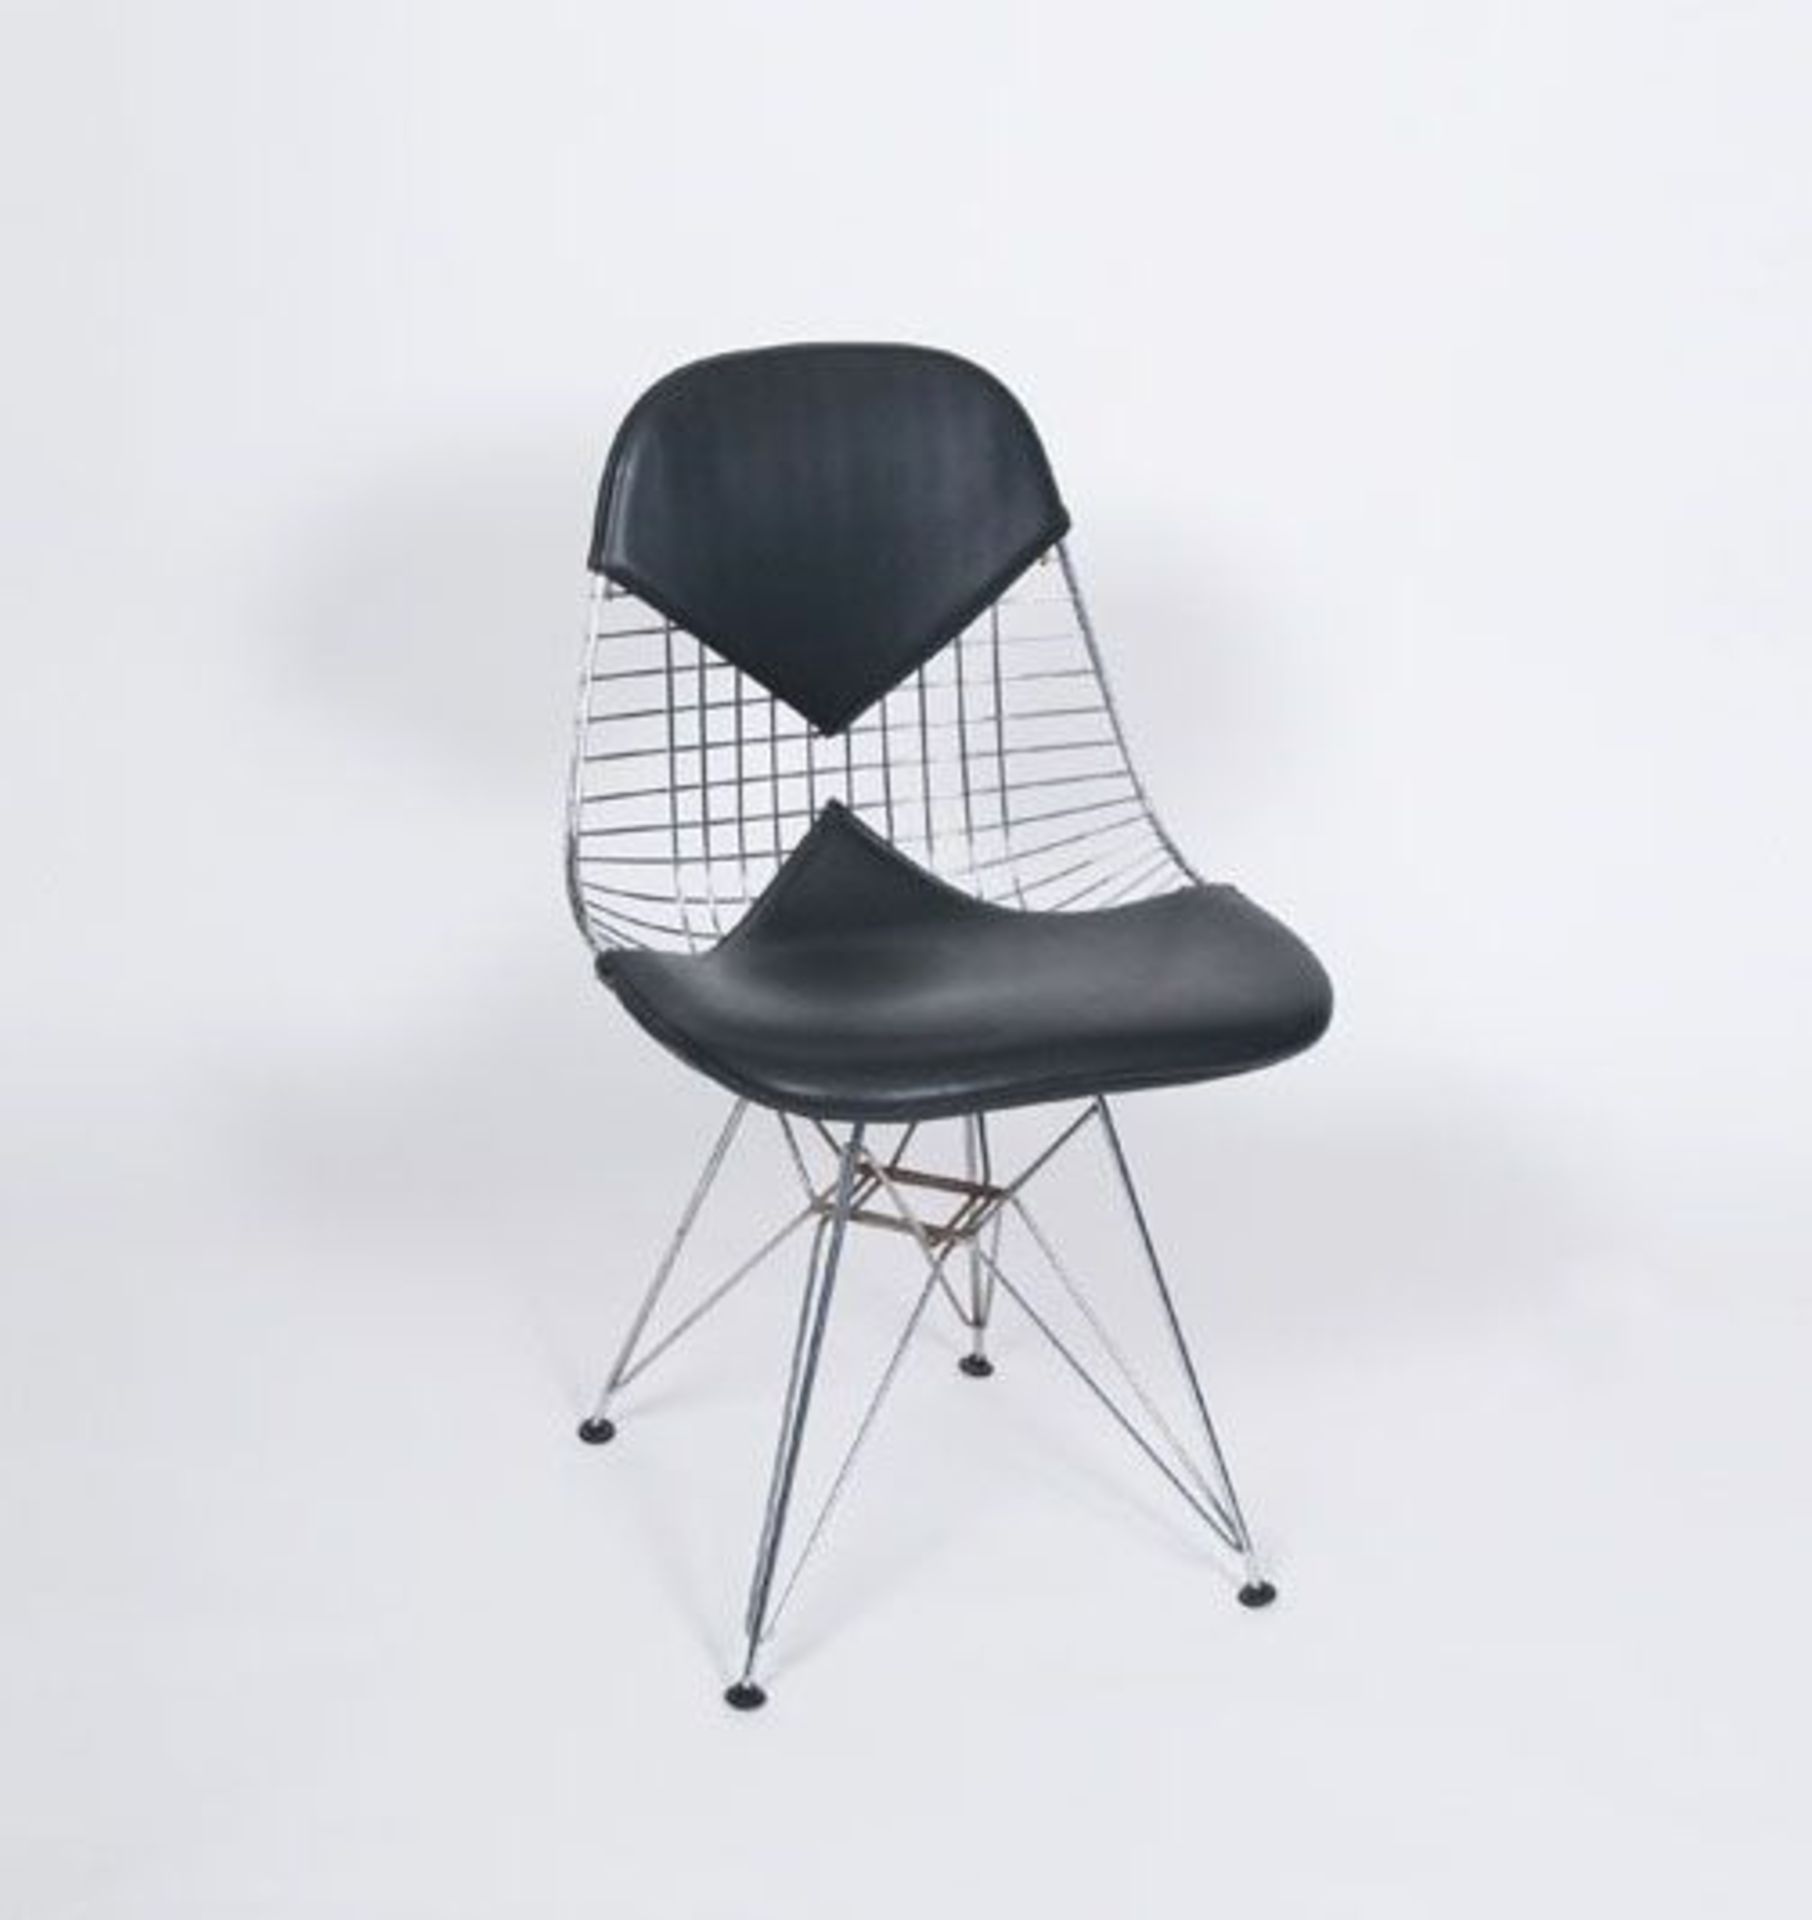 Charles & Ray Eames tätig Mitte 20. Jh. Vintage Wire Chair DKR Entwurf 1951, wenig spätere